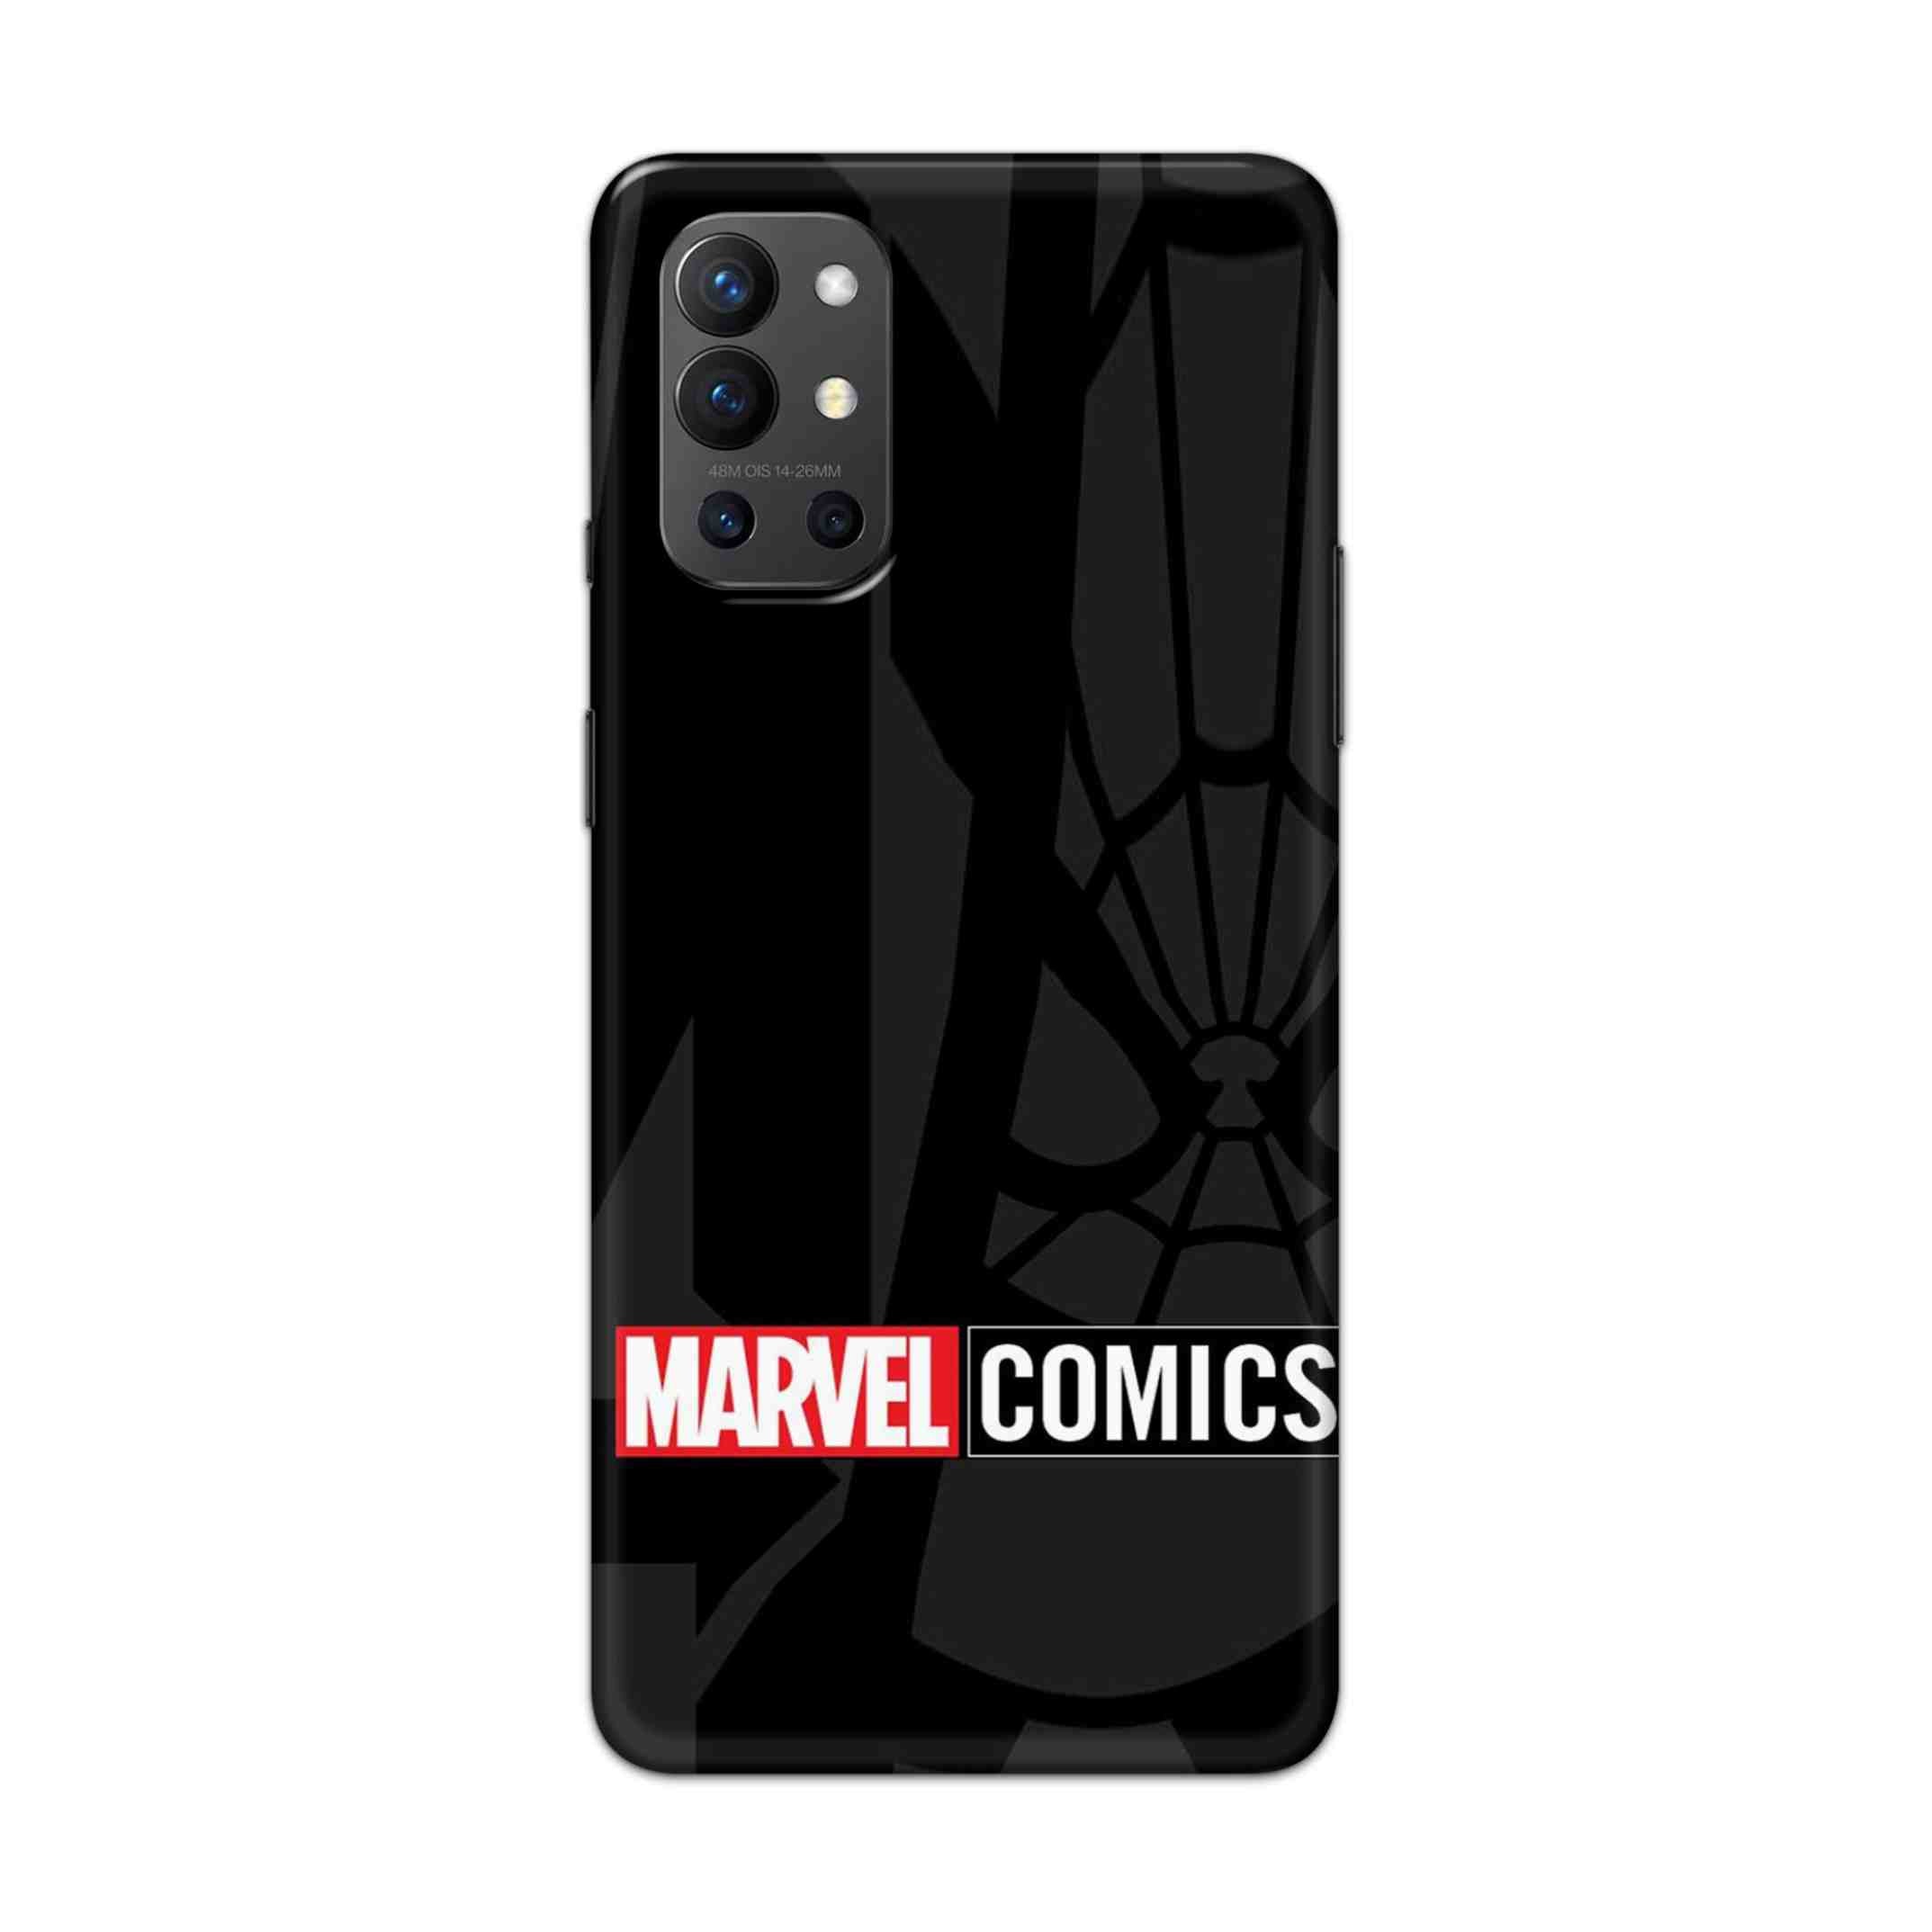 Buy Marvel Comics Hard Back Mobile Phone Case Cover For OnePlus 9R / 8T Online